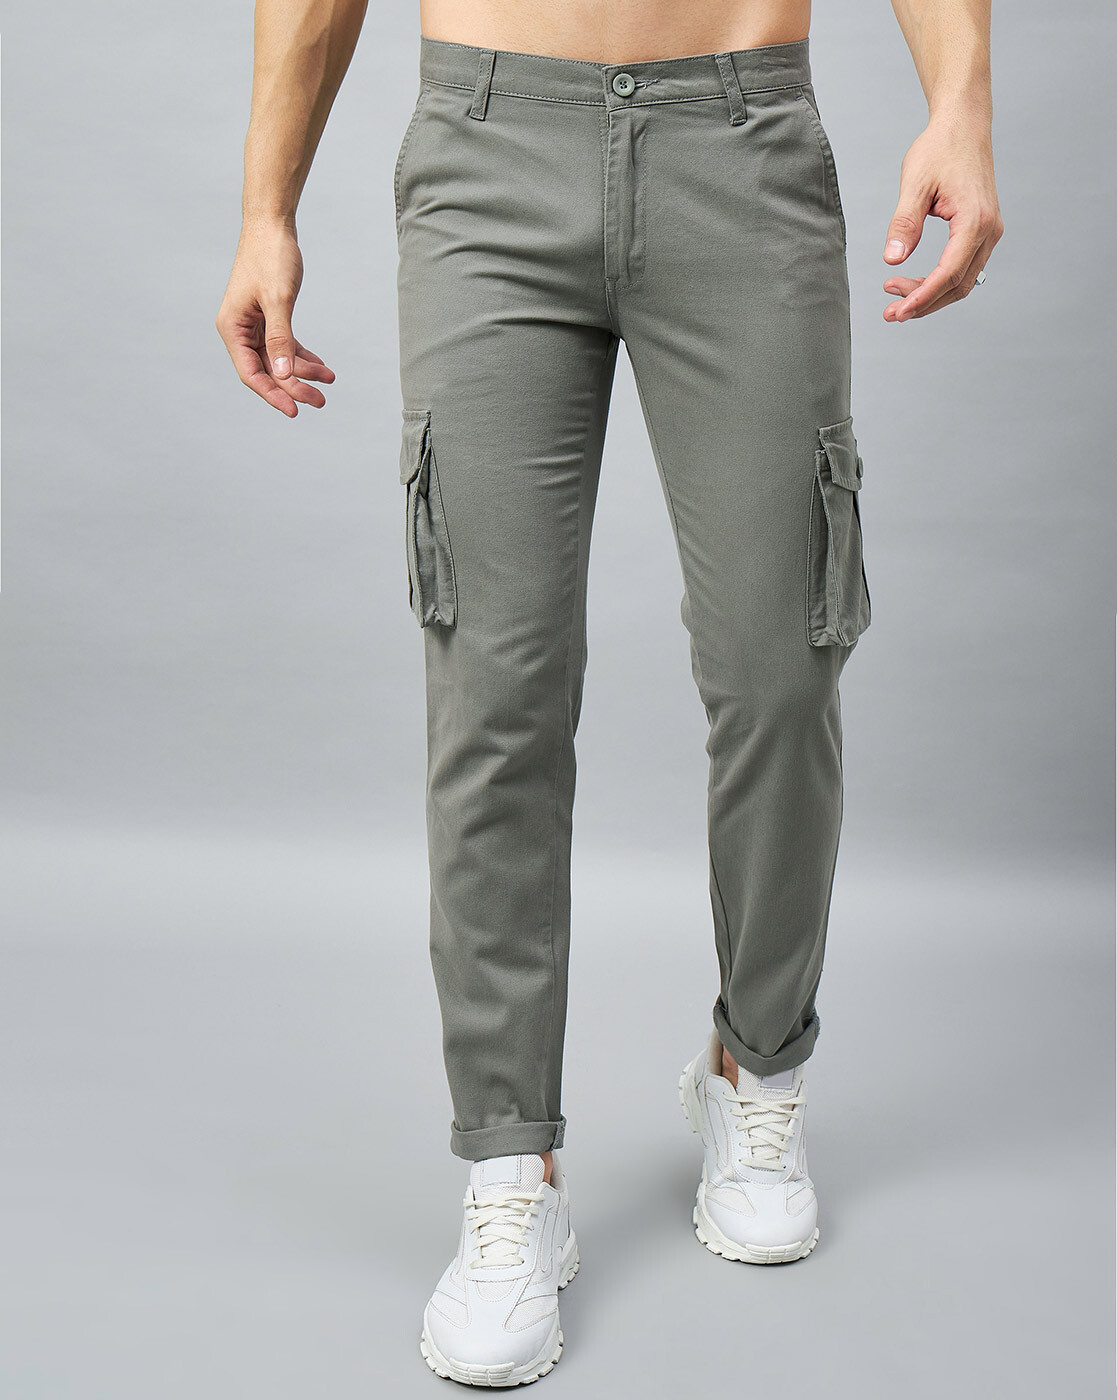 Solid Color Multi-pocket Design Jogger Cargo Pants | Cargo pants style, Cargo  pants, Fashion pants